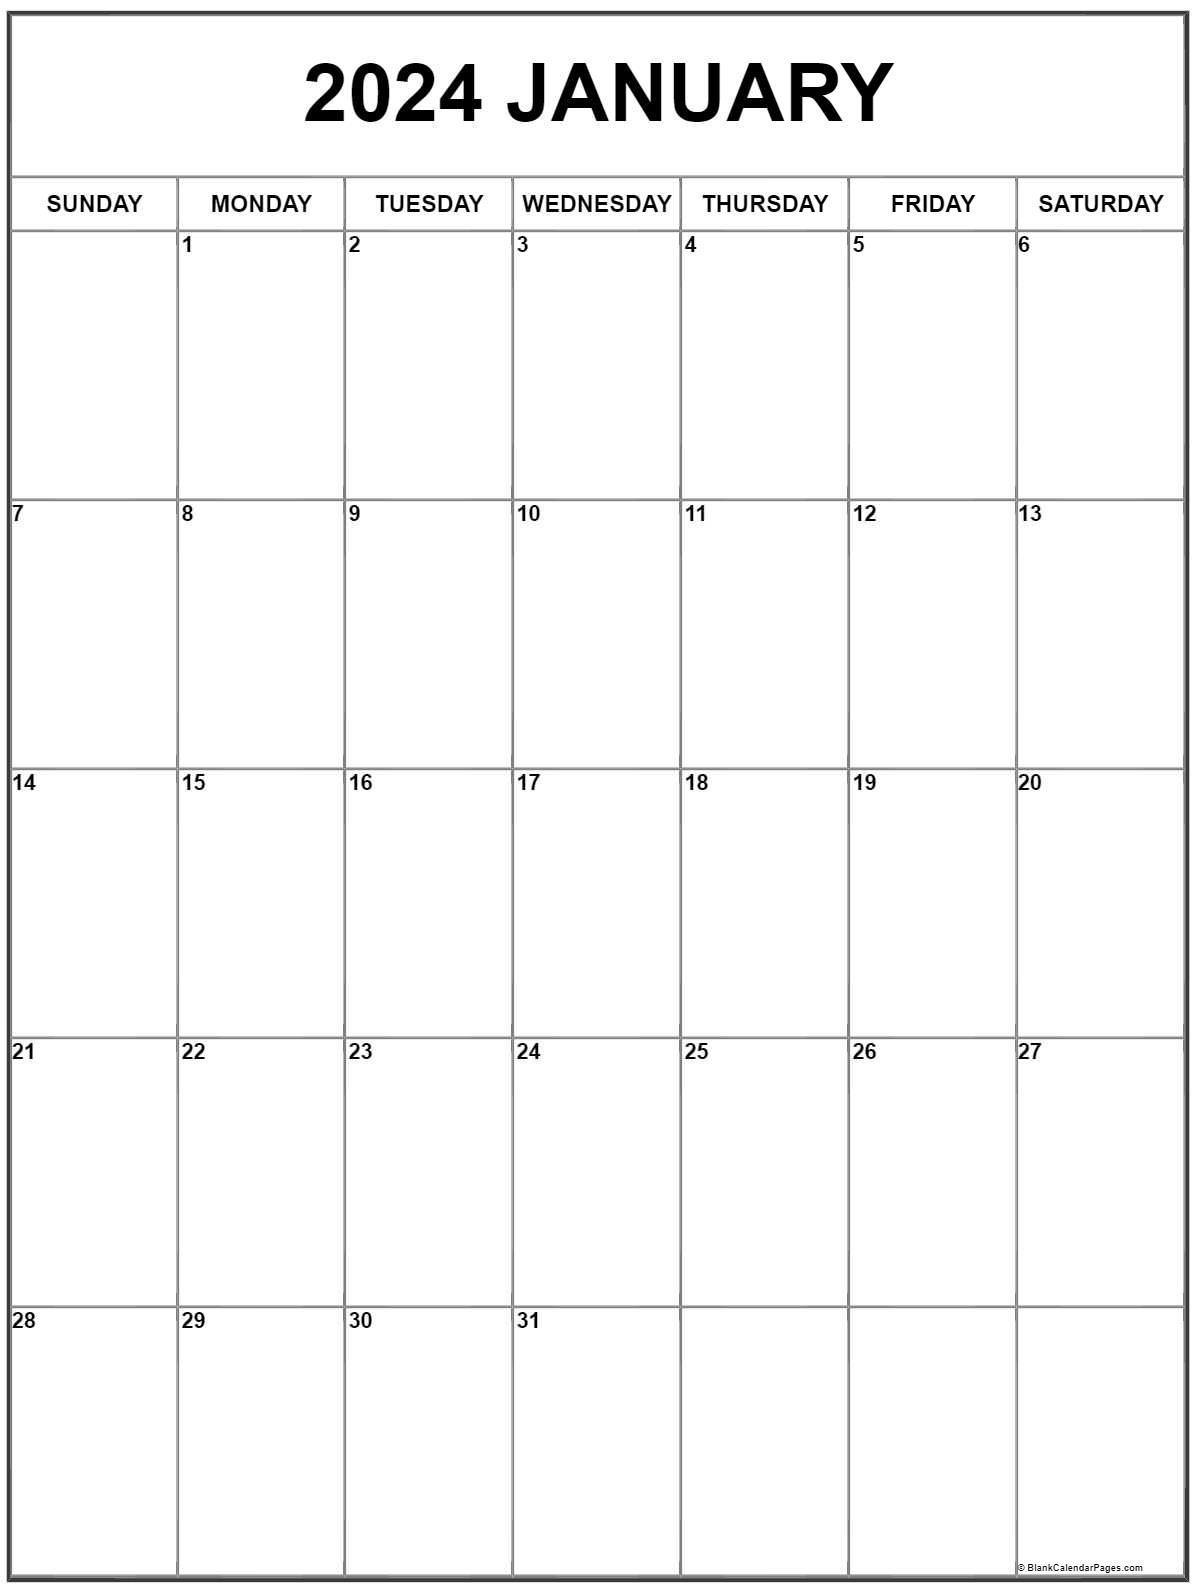 january-2023-free-printable-calendar-customize-and-print